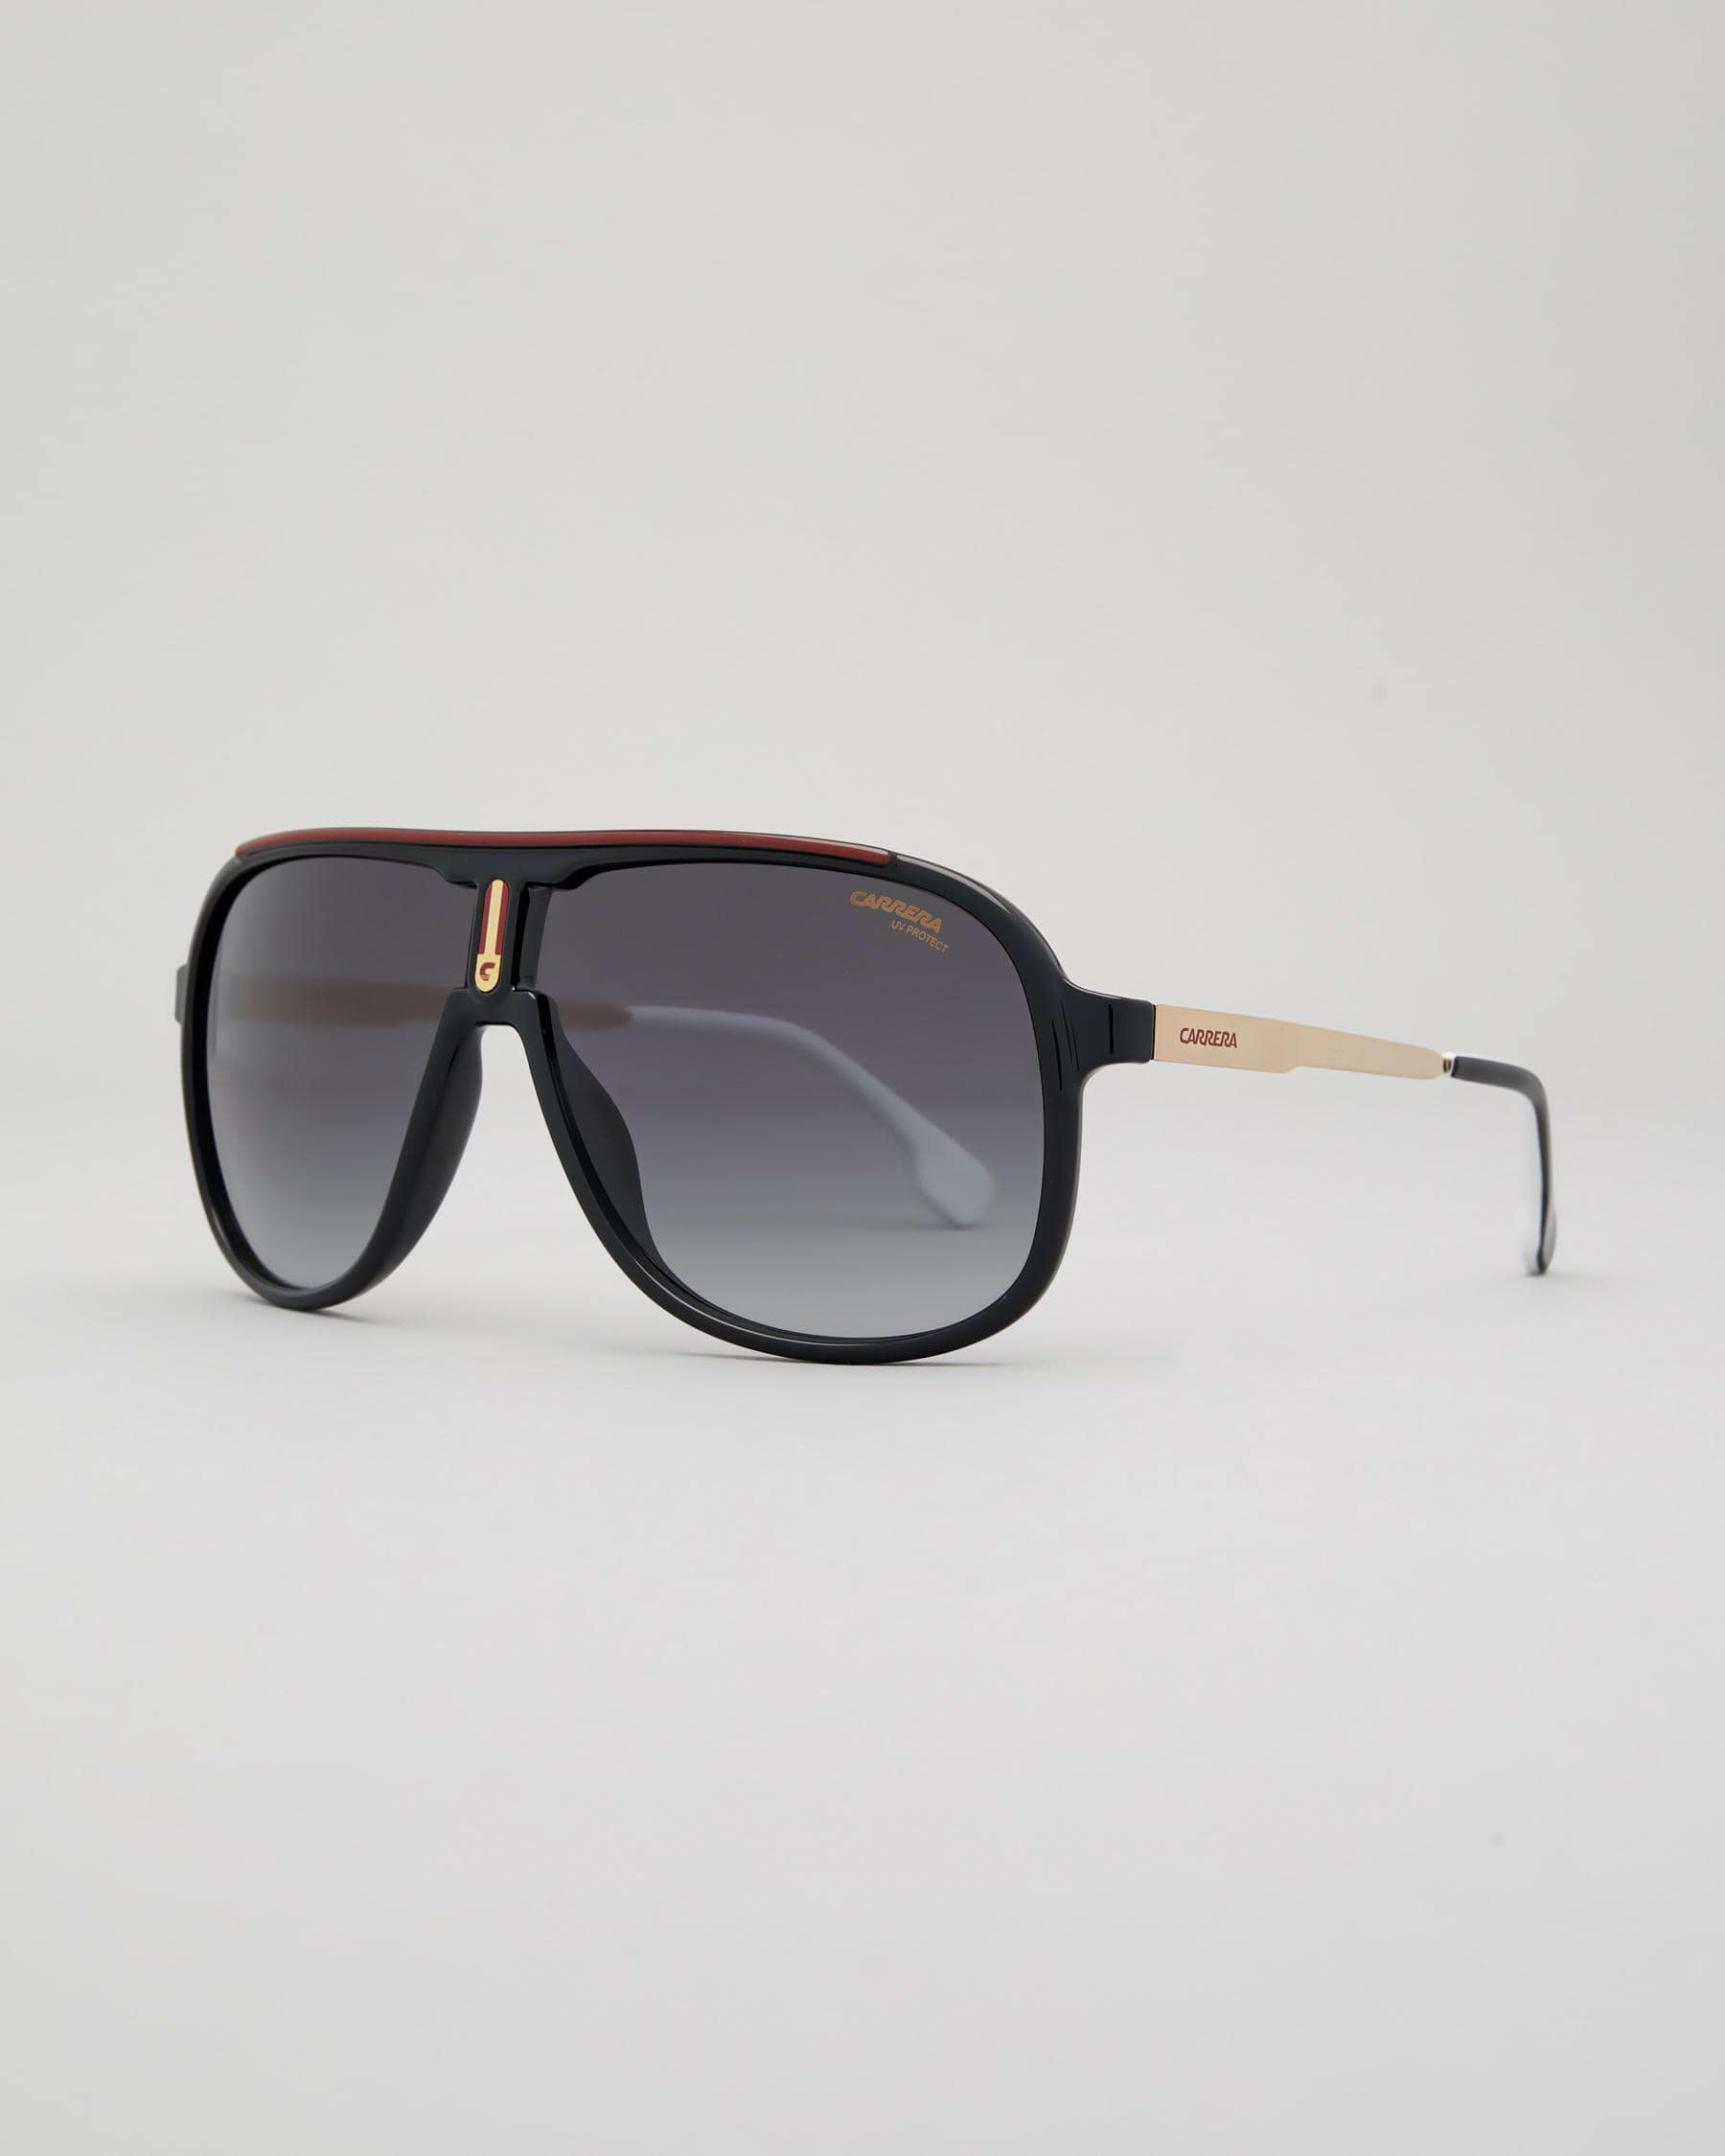 Carrera 1007/s Sunglasses In Black/ Grey - Fast Shipping & Easy Returns ...